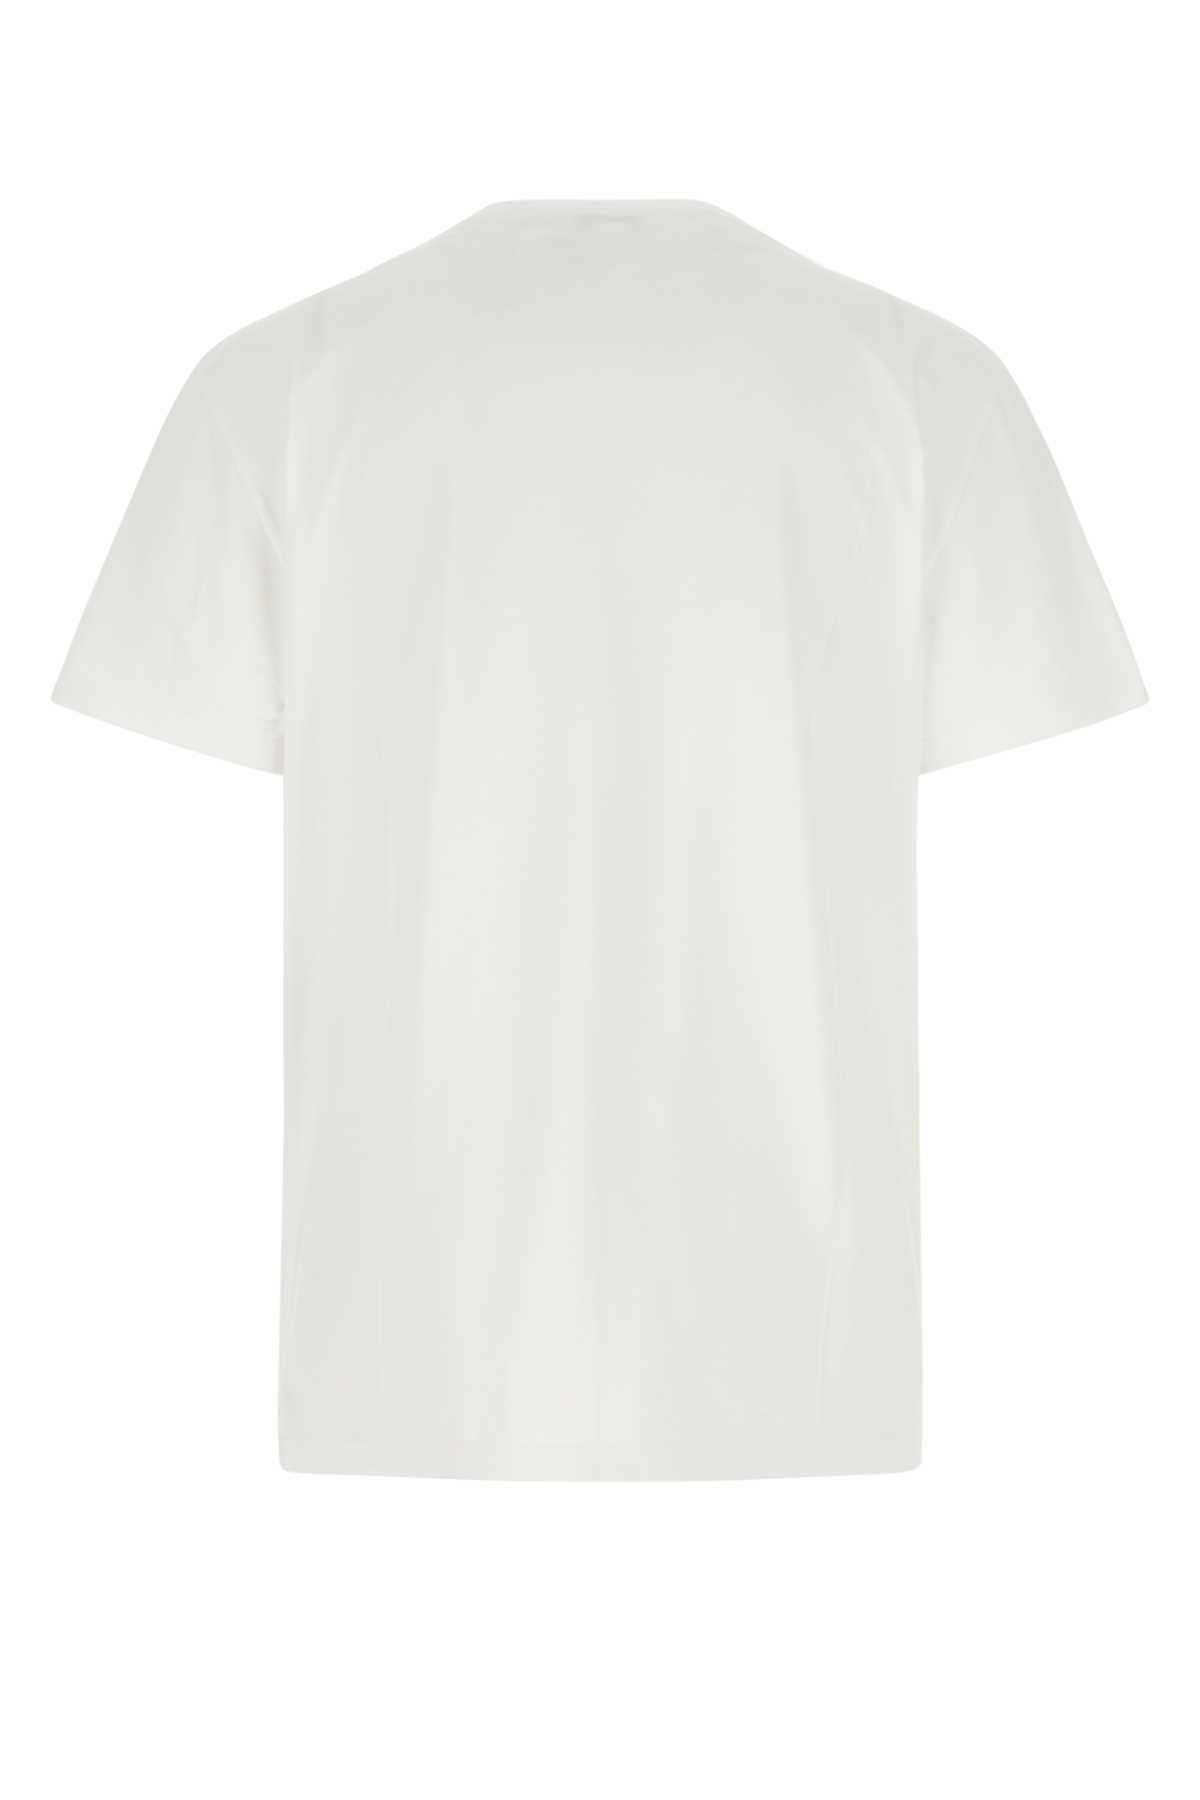 Alexander Mcqueen White Cotton Oversize T-shirt In 0900